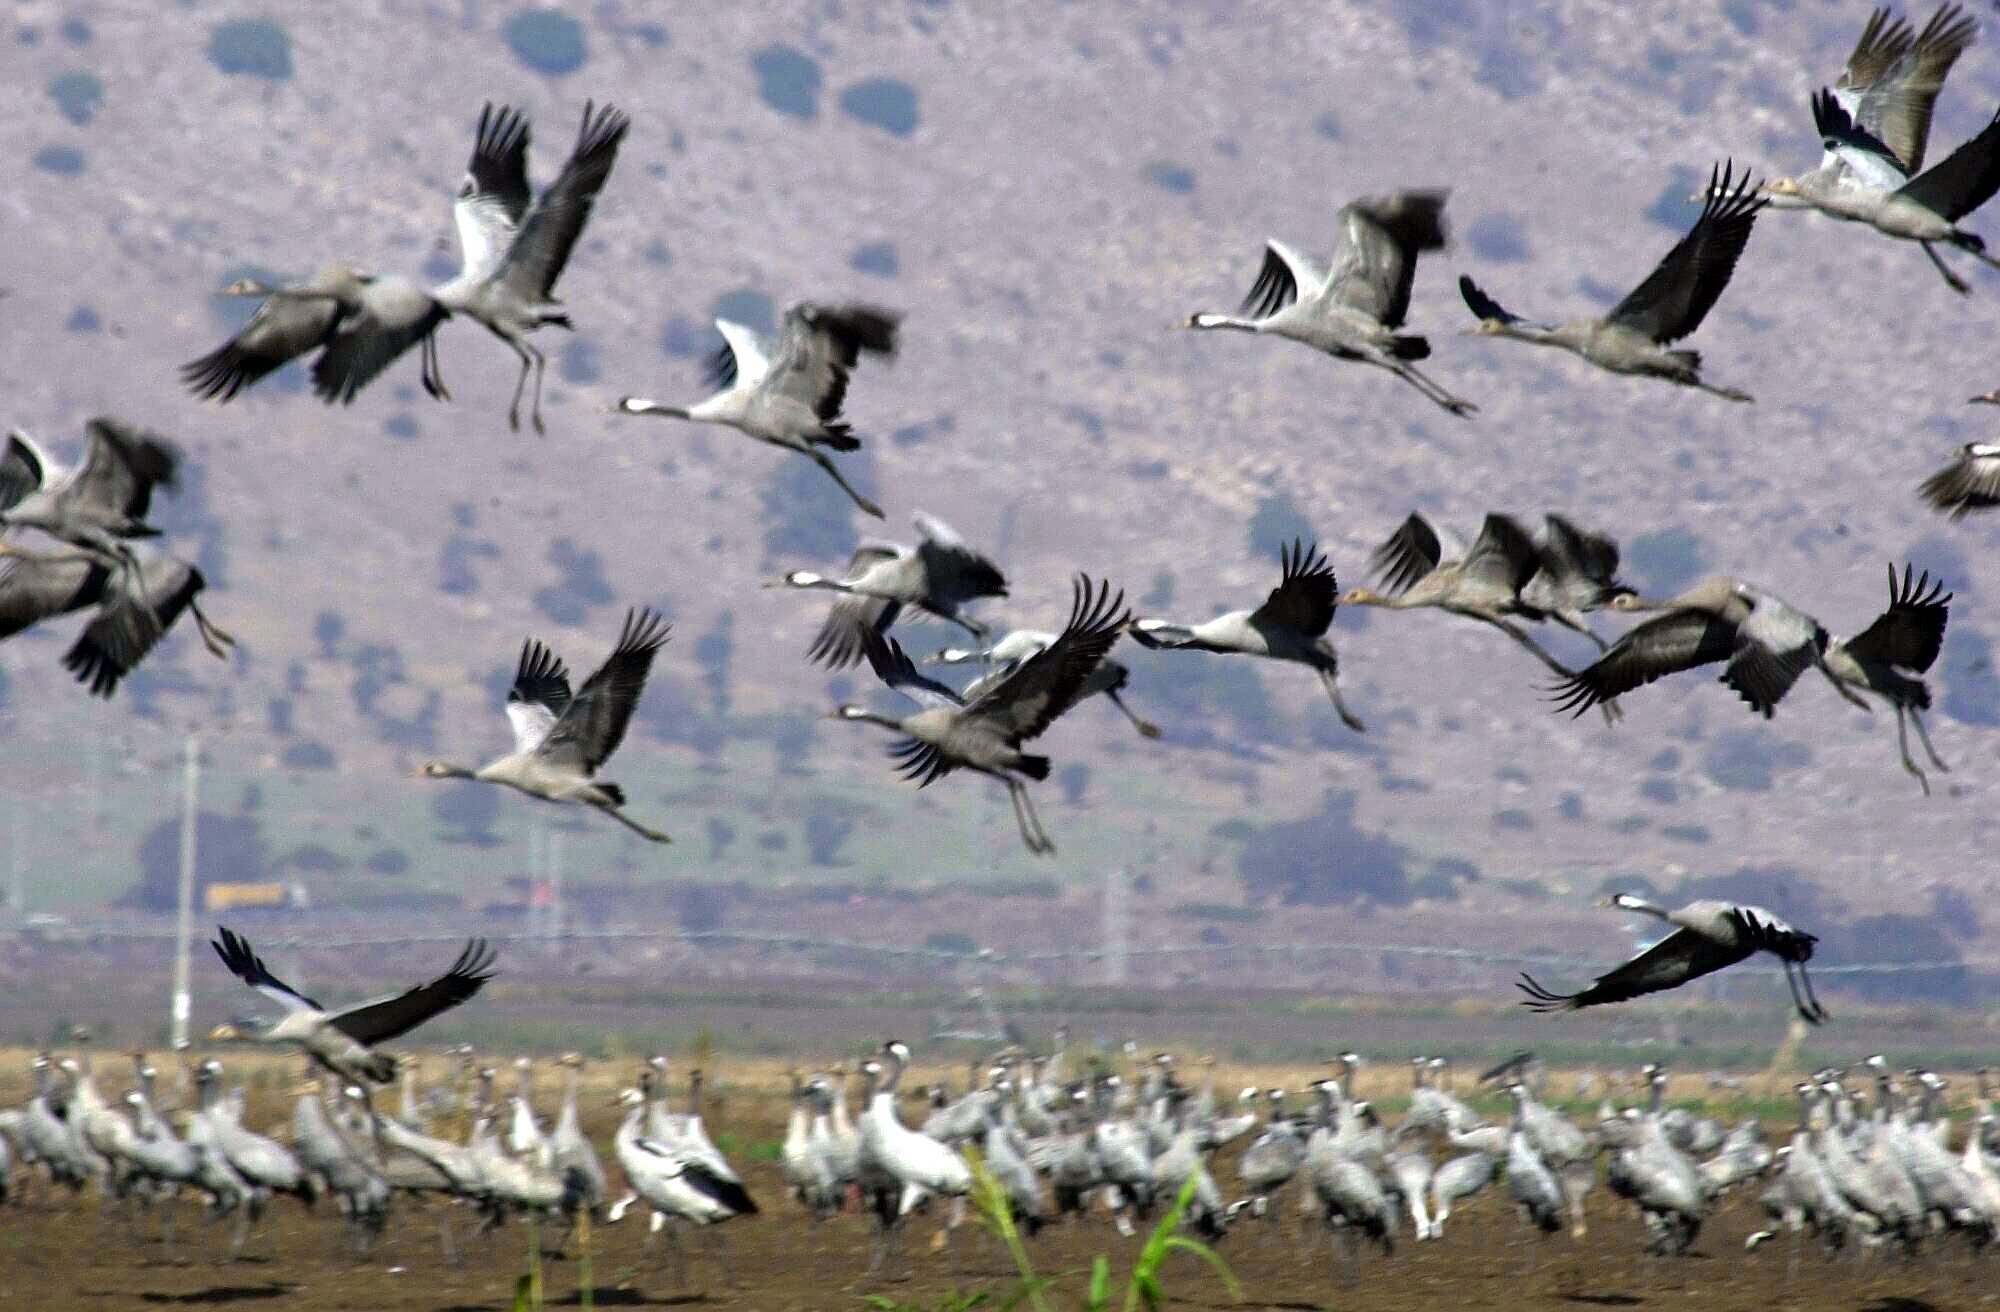 Birds migrate. Миграция птиц. Миграция птиц в Израиле. Миграция птиц Забайкальского края.